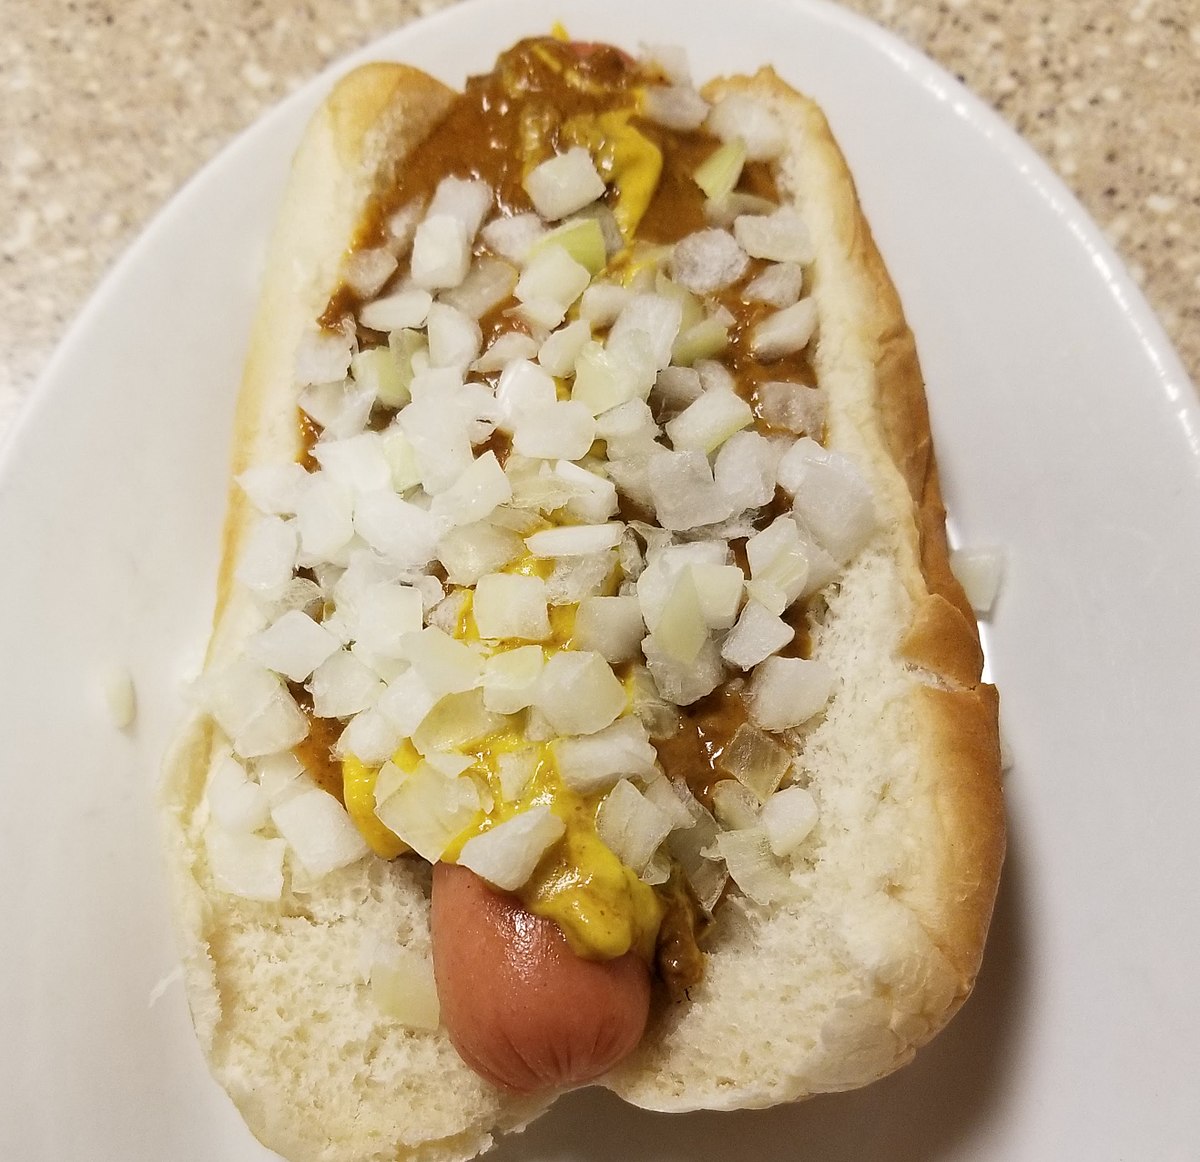 Coney Island Hot Dog Wikipedia